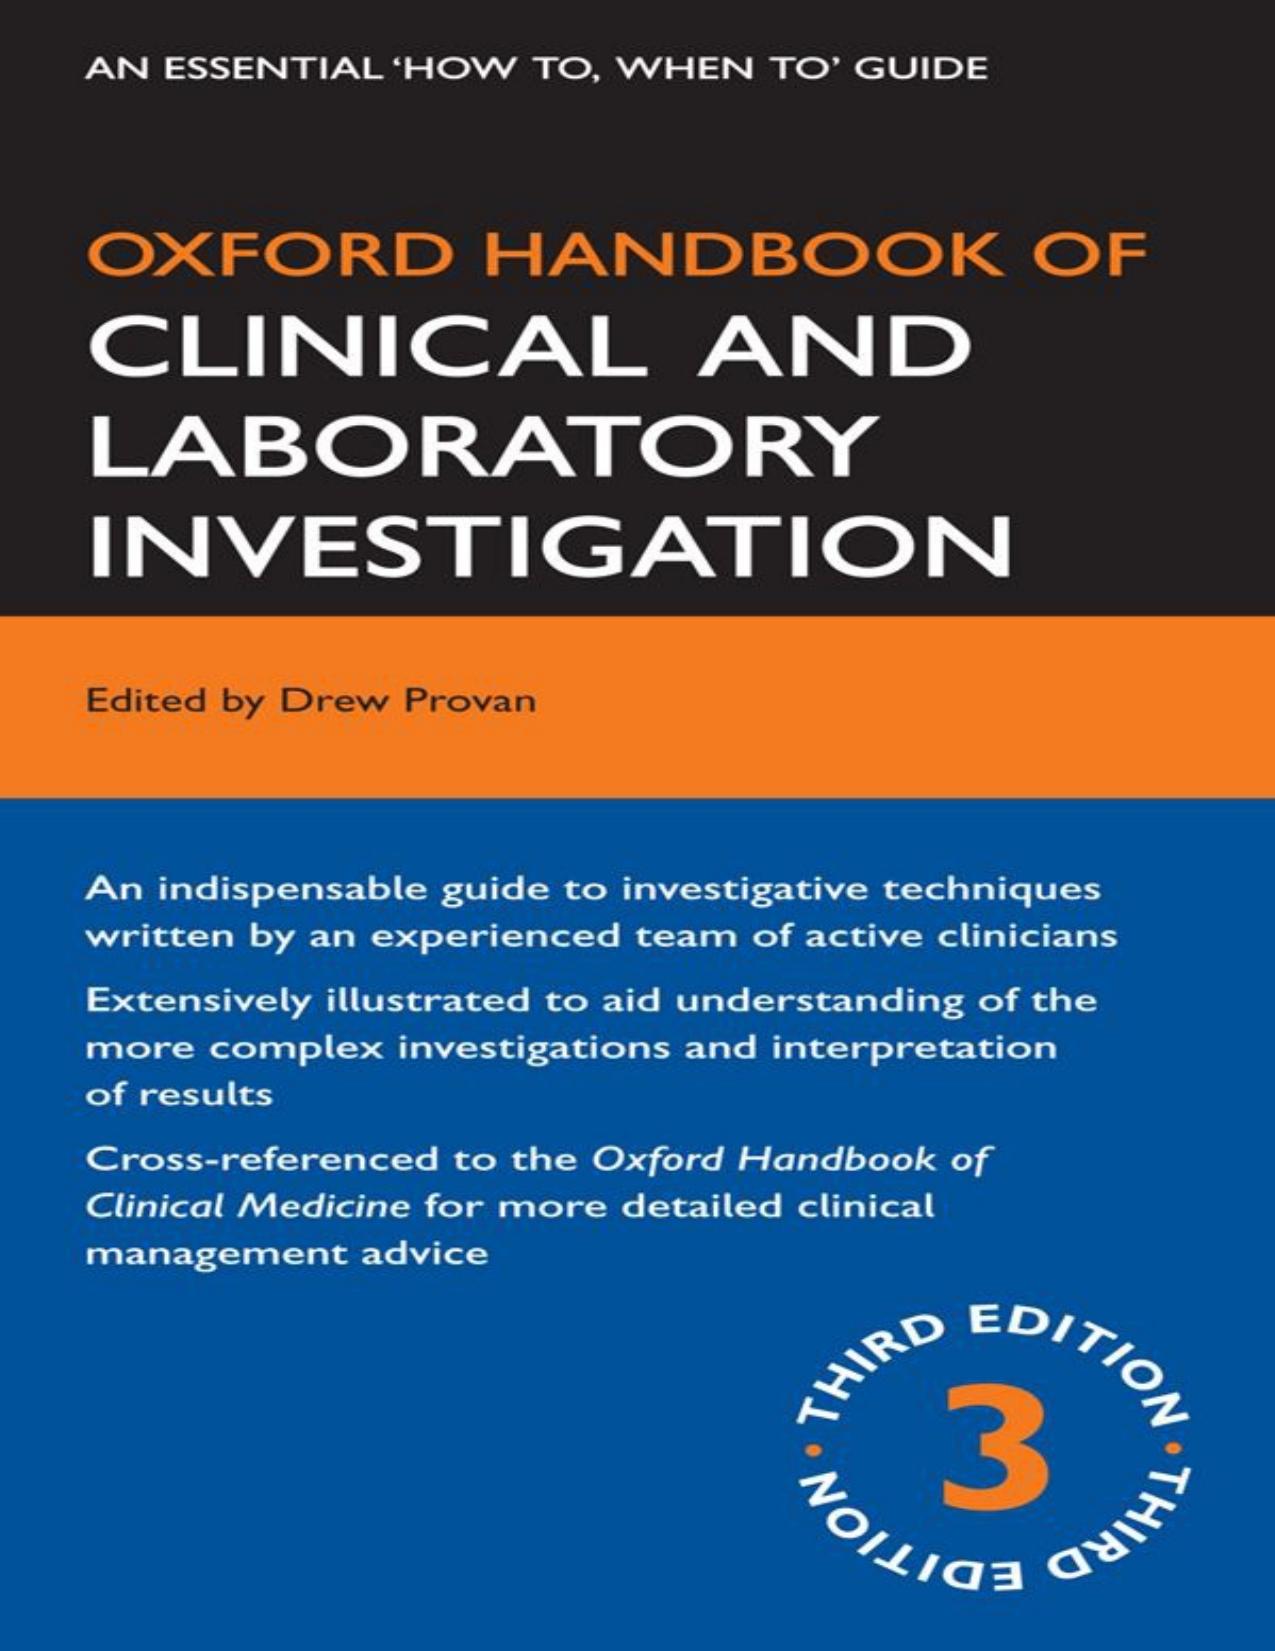 Oxford Handbook of Clinical and Laboratory Investigation (Oxford Medical Handbooks)